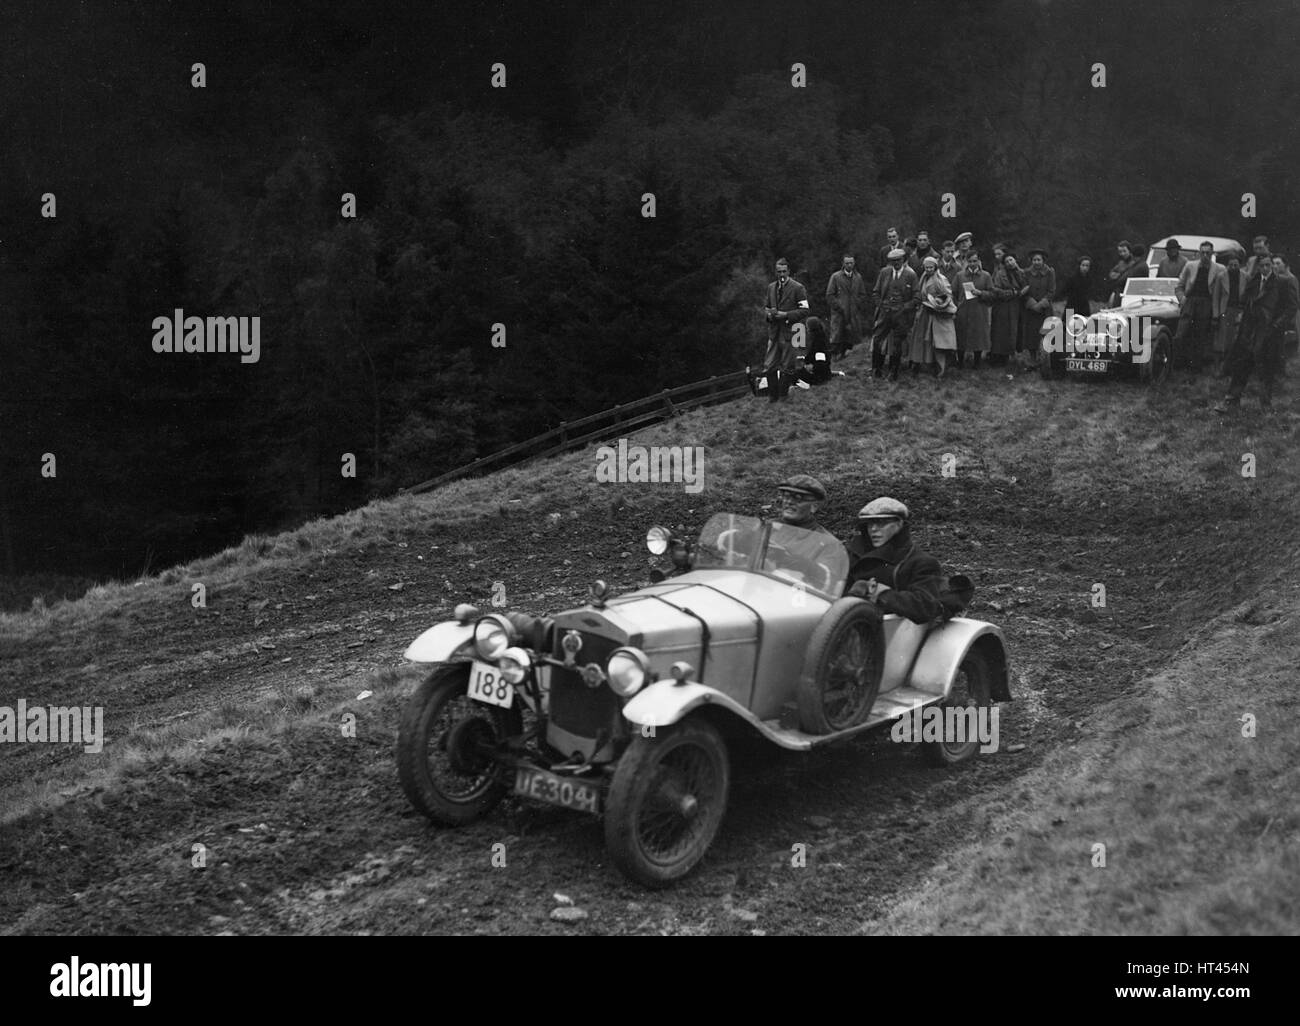 Frazer-Nash Super Sports of KM Roberts competing in the MCC Edinburgh Trial, 1938. Artist: Bill Brunell. Stock Photo